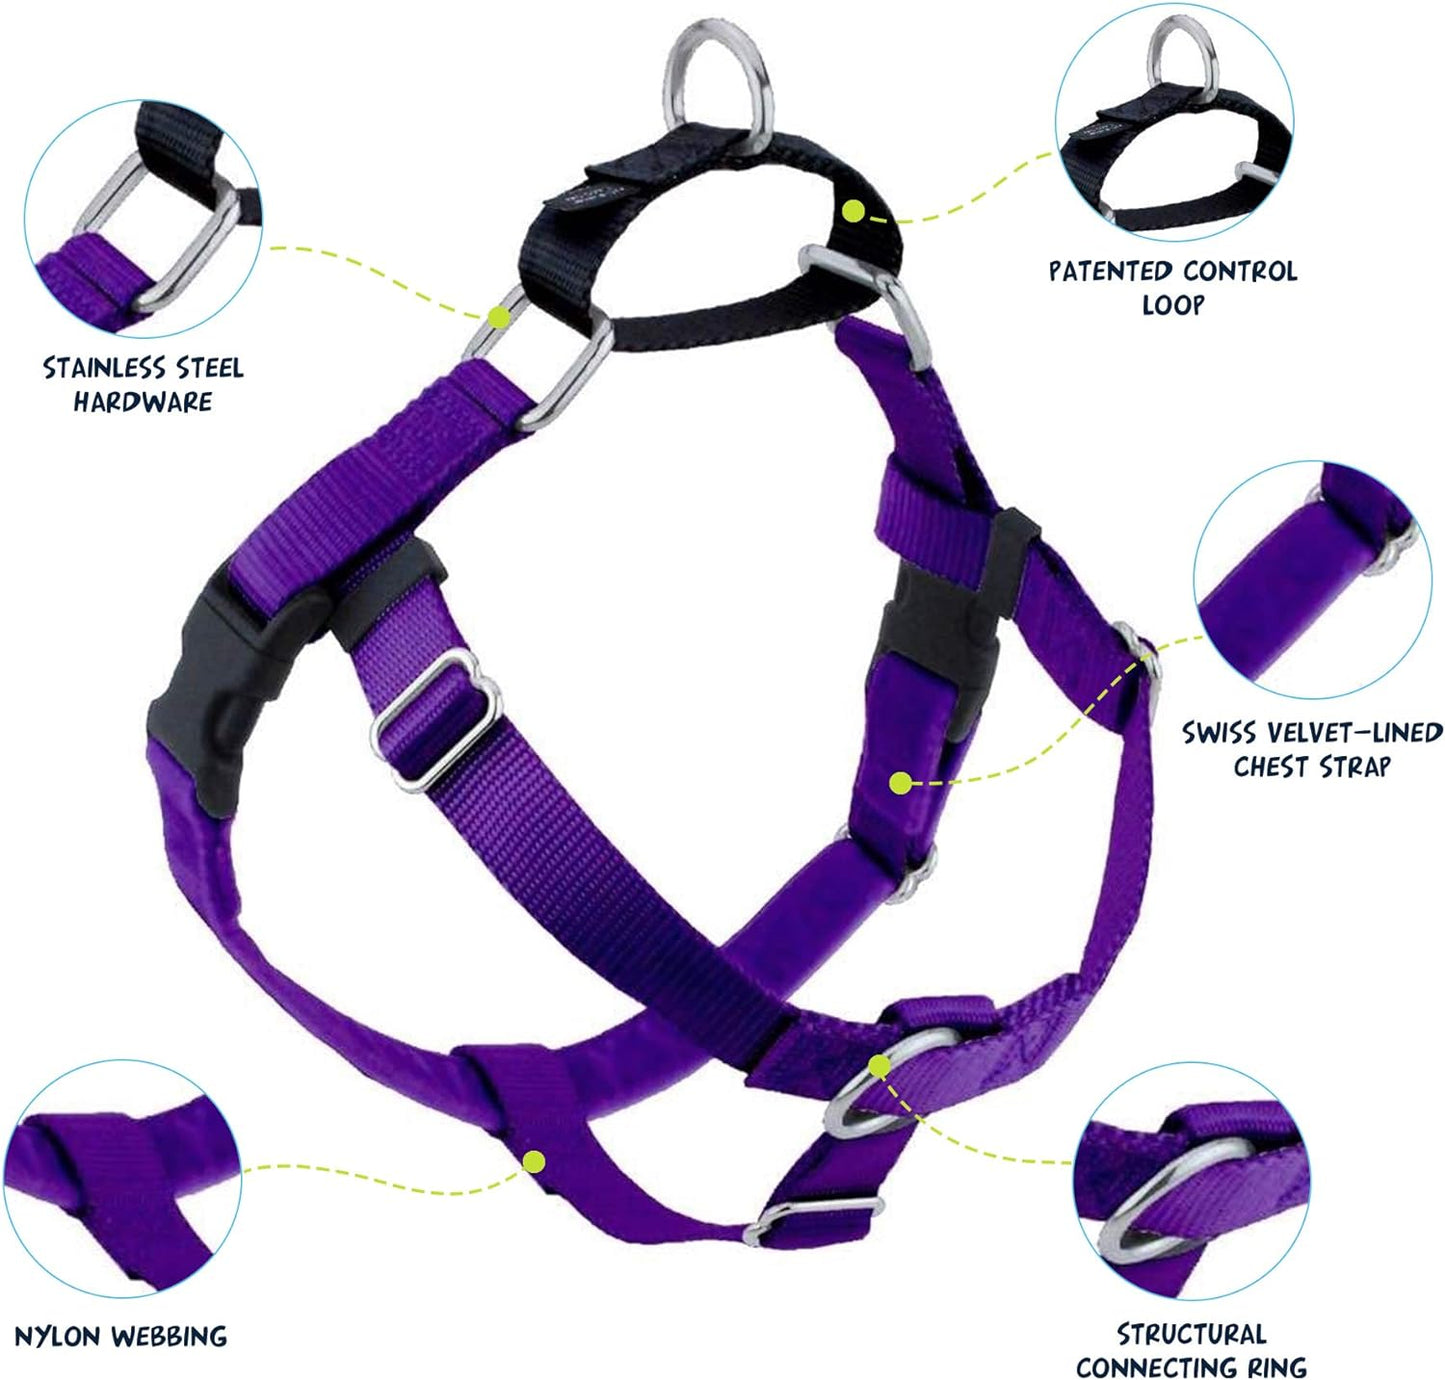 2 Hounds Design Freedom No-Pull Nylon Dog Harness Only, Medium, Purple